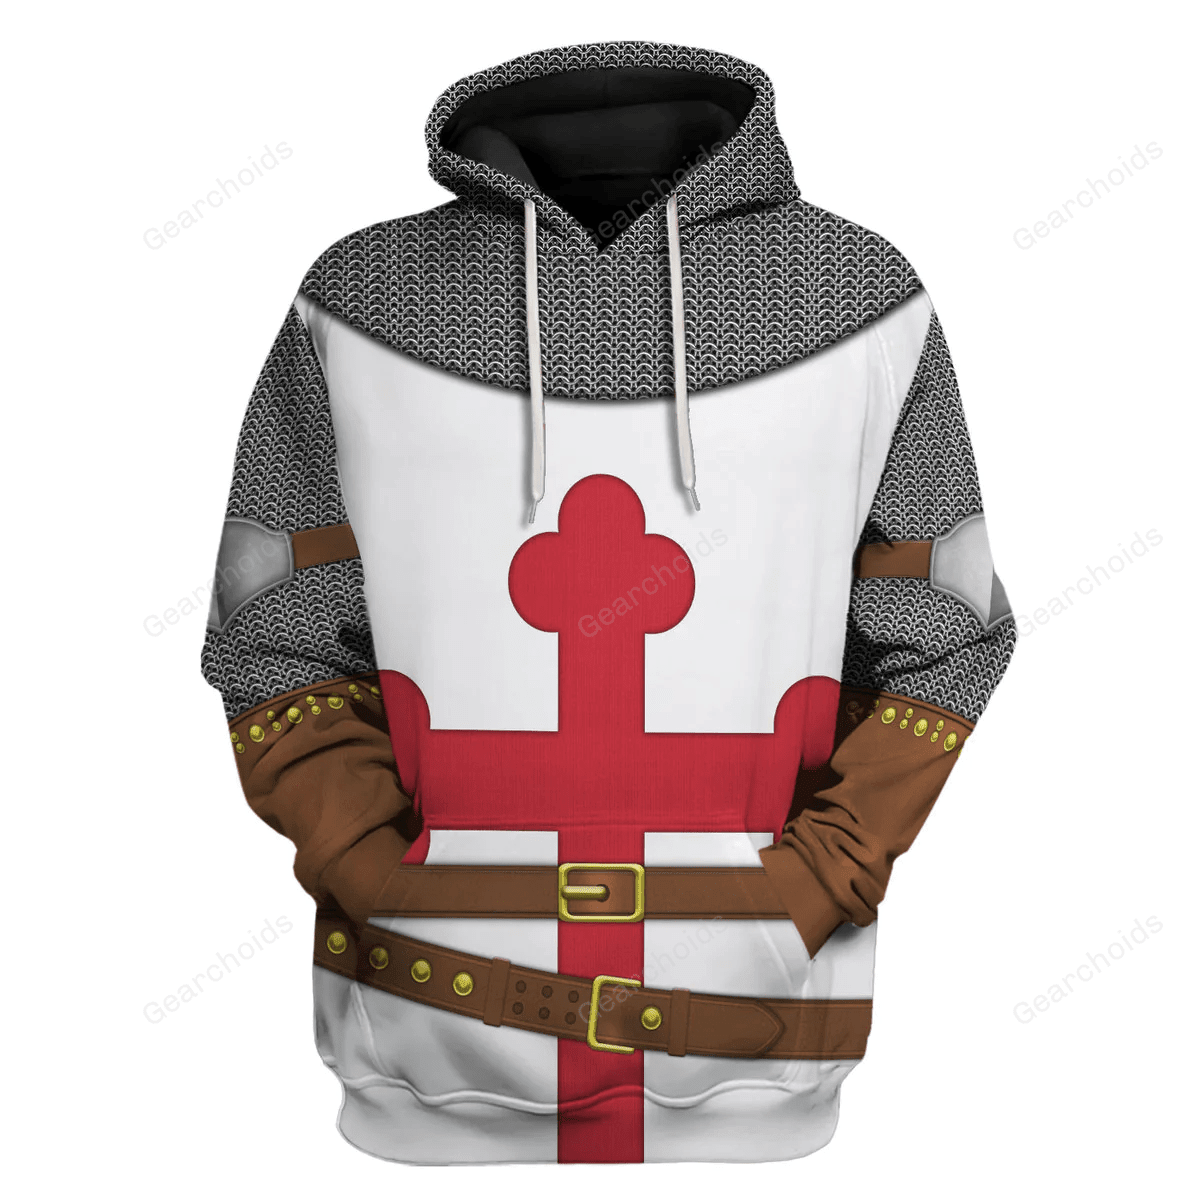 Gearchoids Galahad Knight Costume Hoodie Sweatshirt T-Shirt Tracksuit